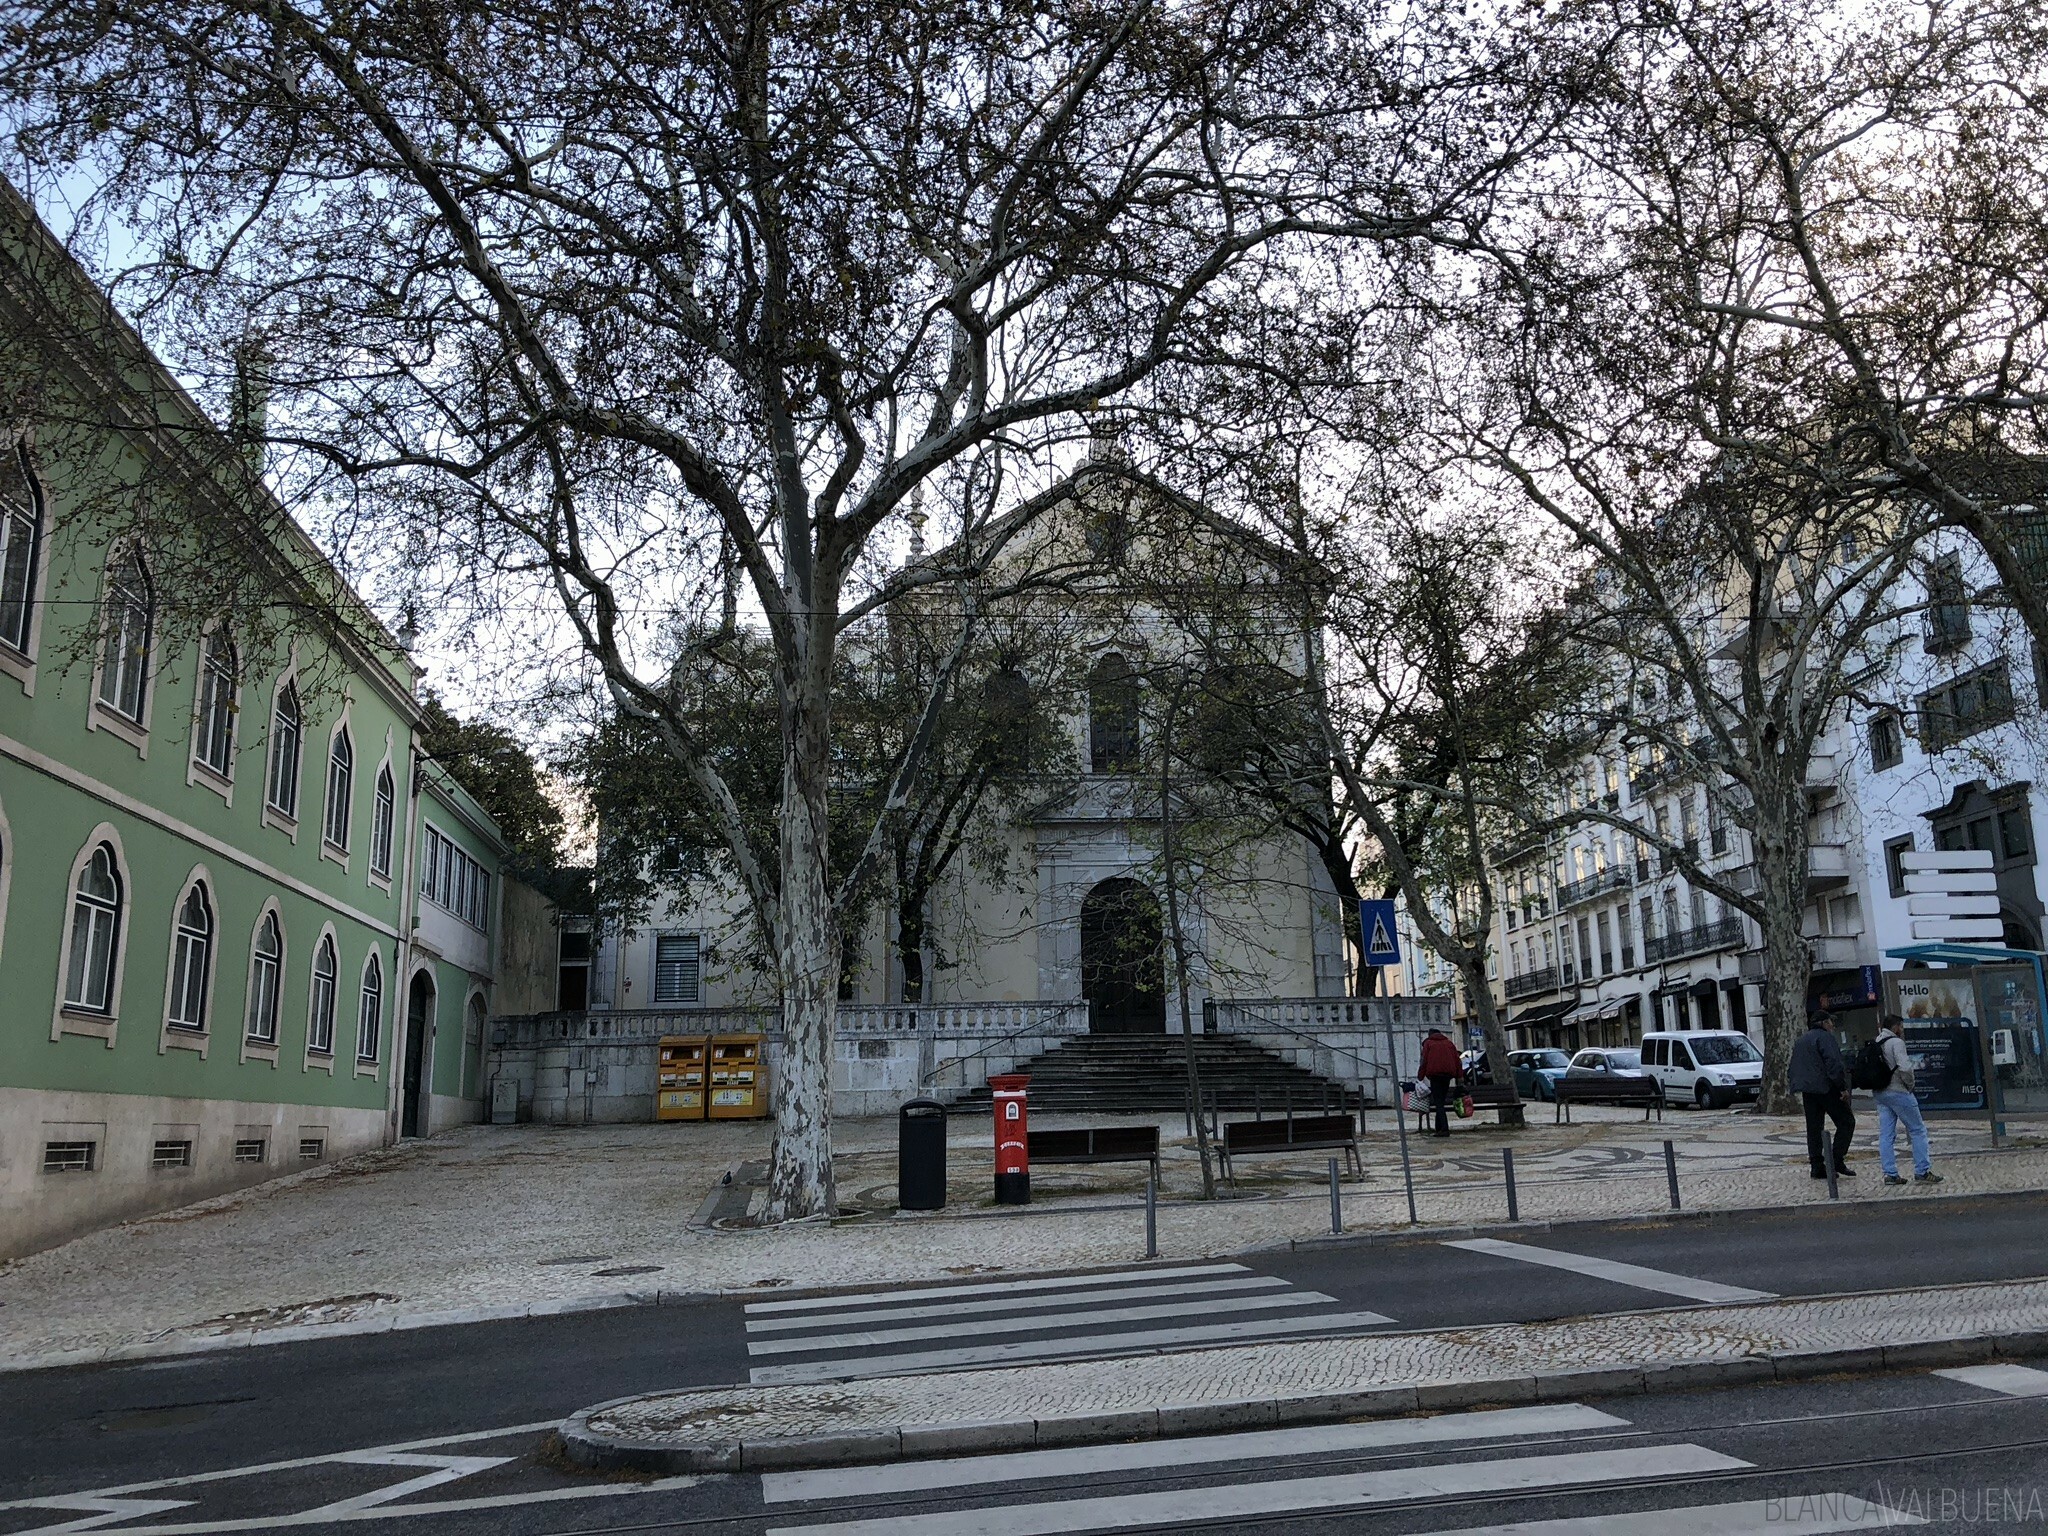 the Church de São Mamede has incredible azulejoa